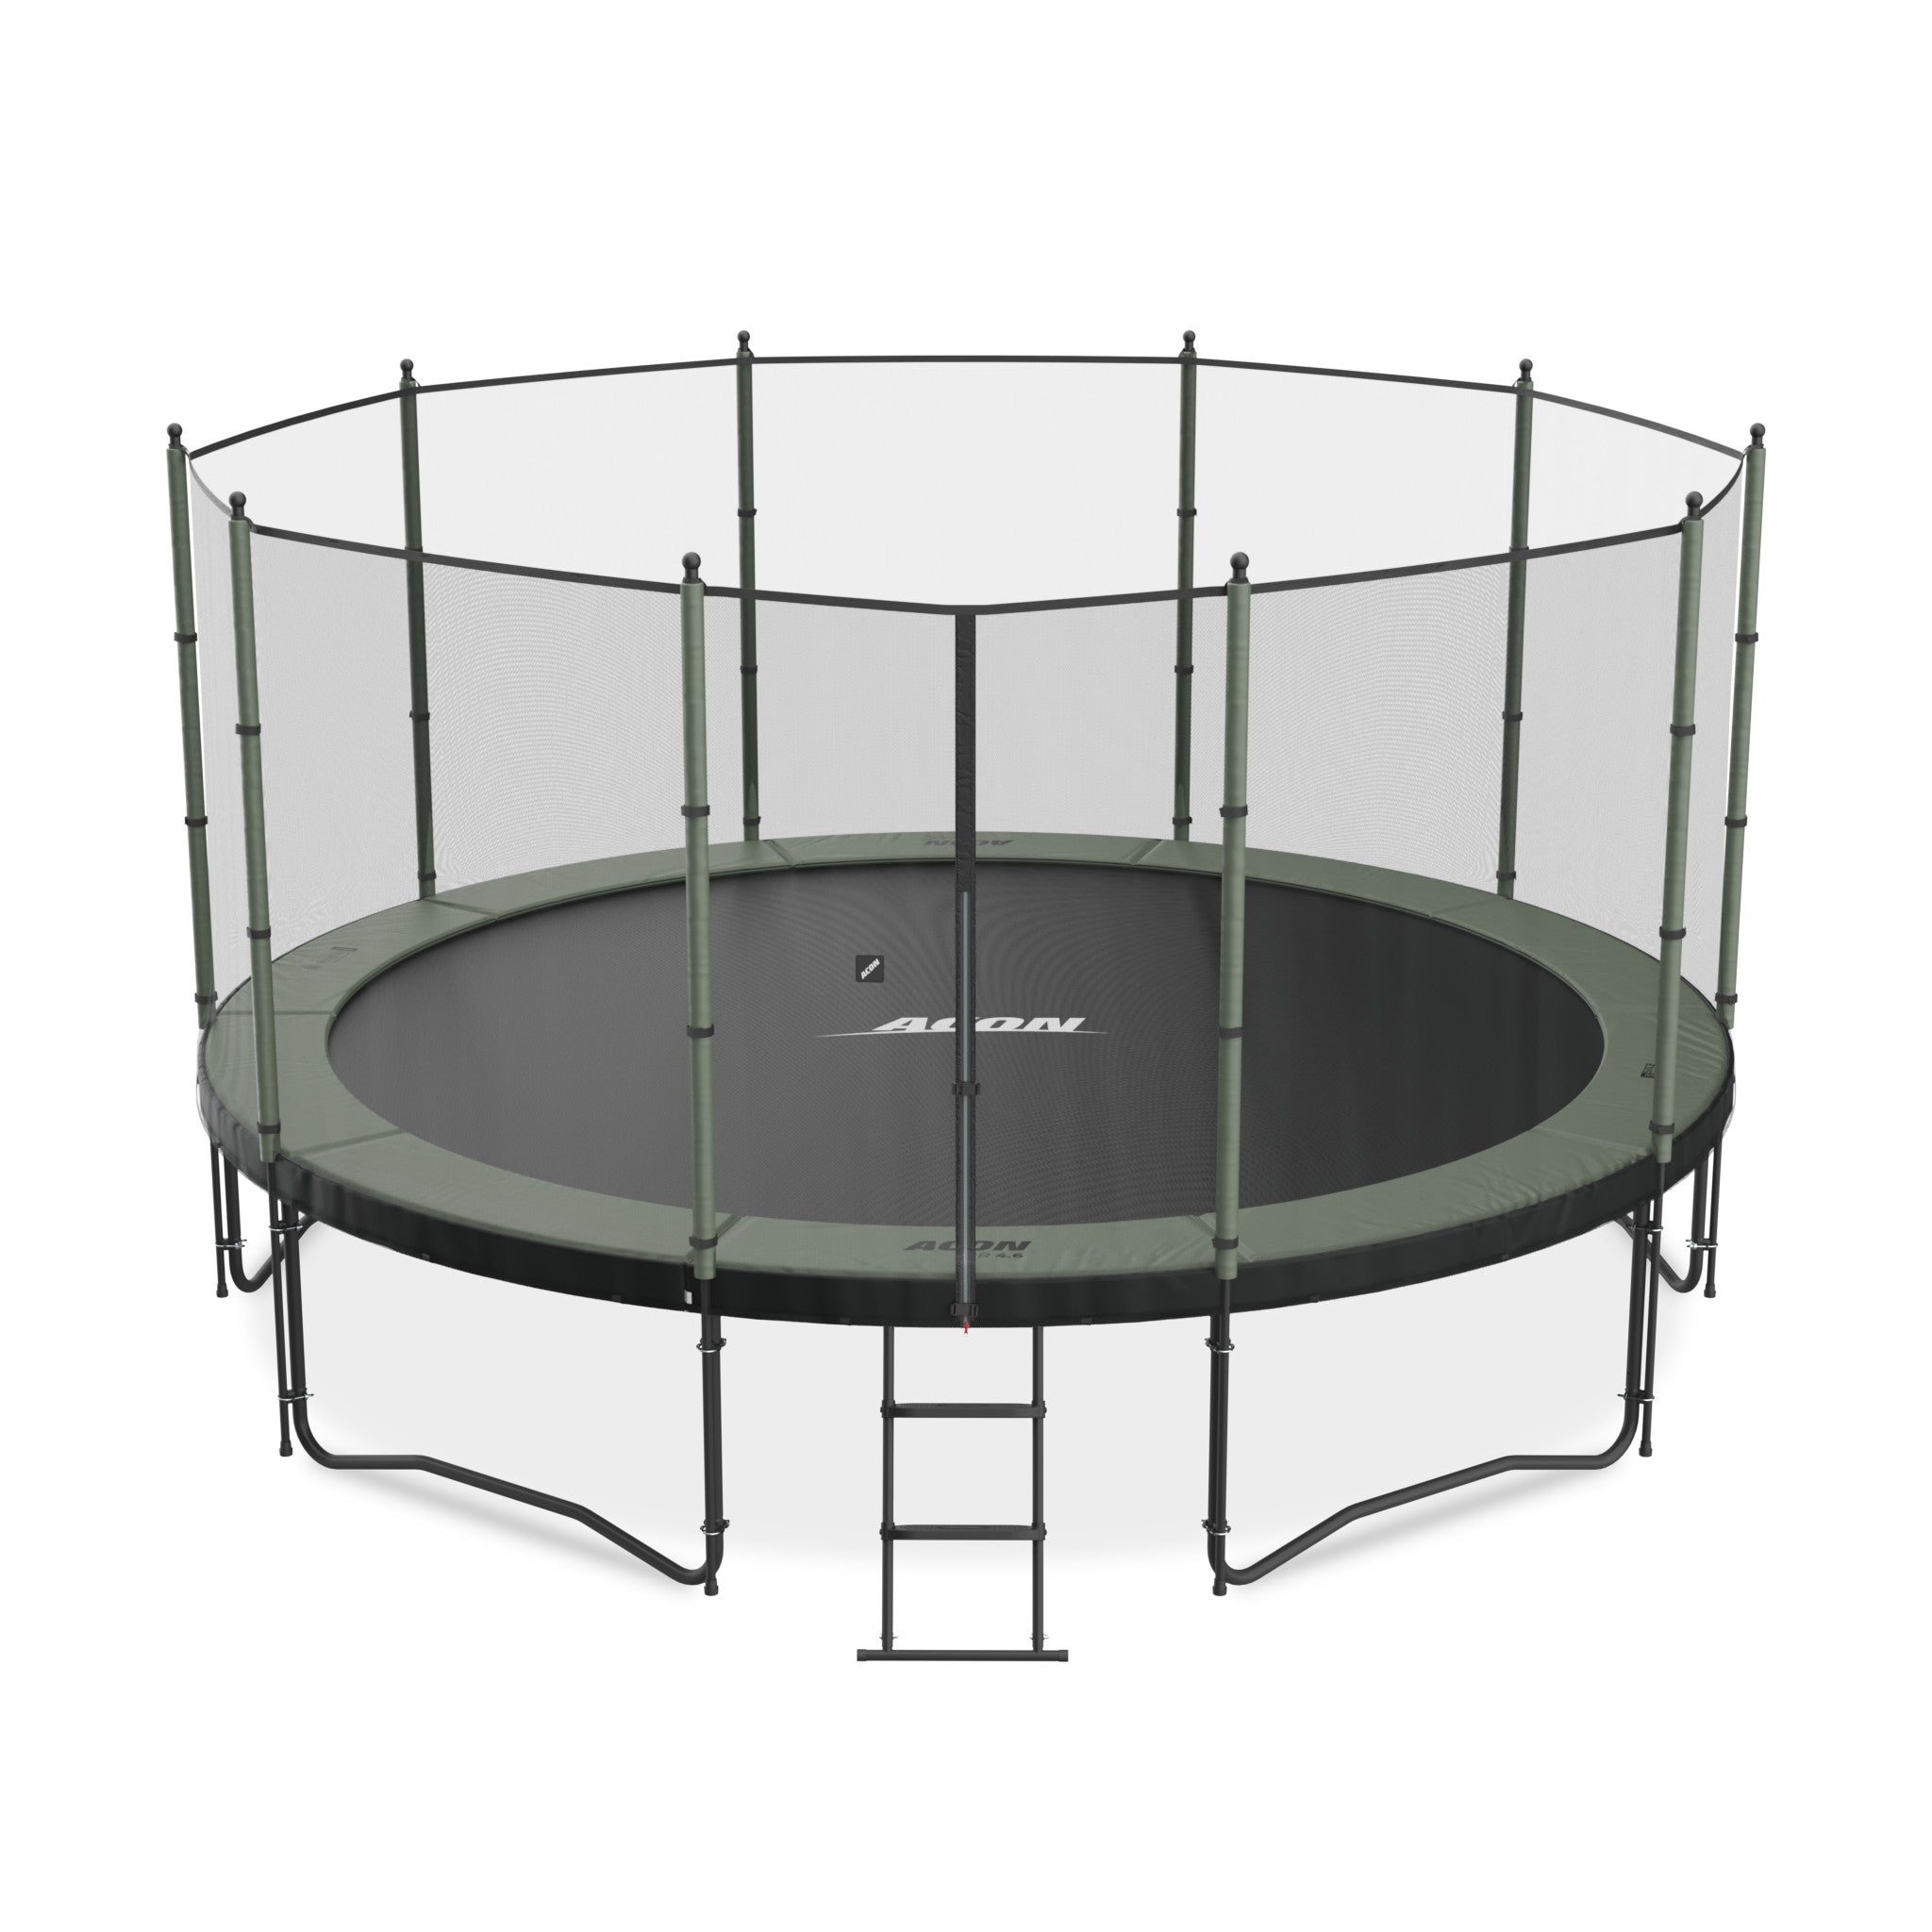 ACON Air 4,6m trampoliini Standard turvaverkolla.